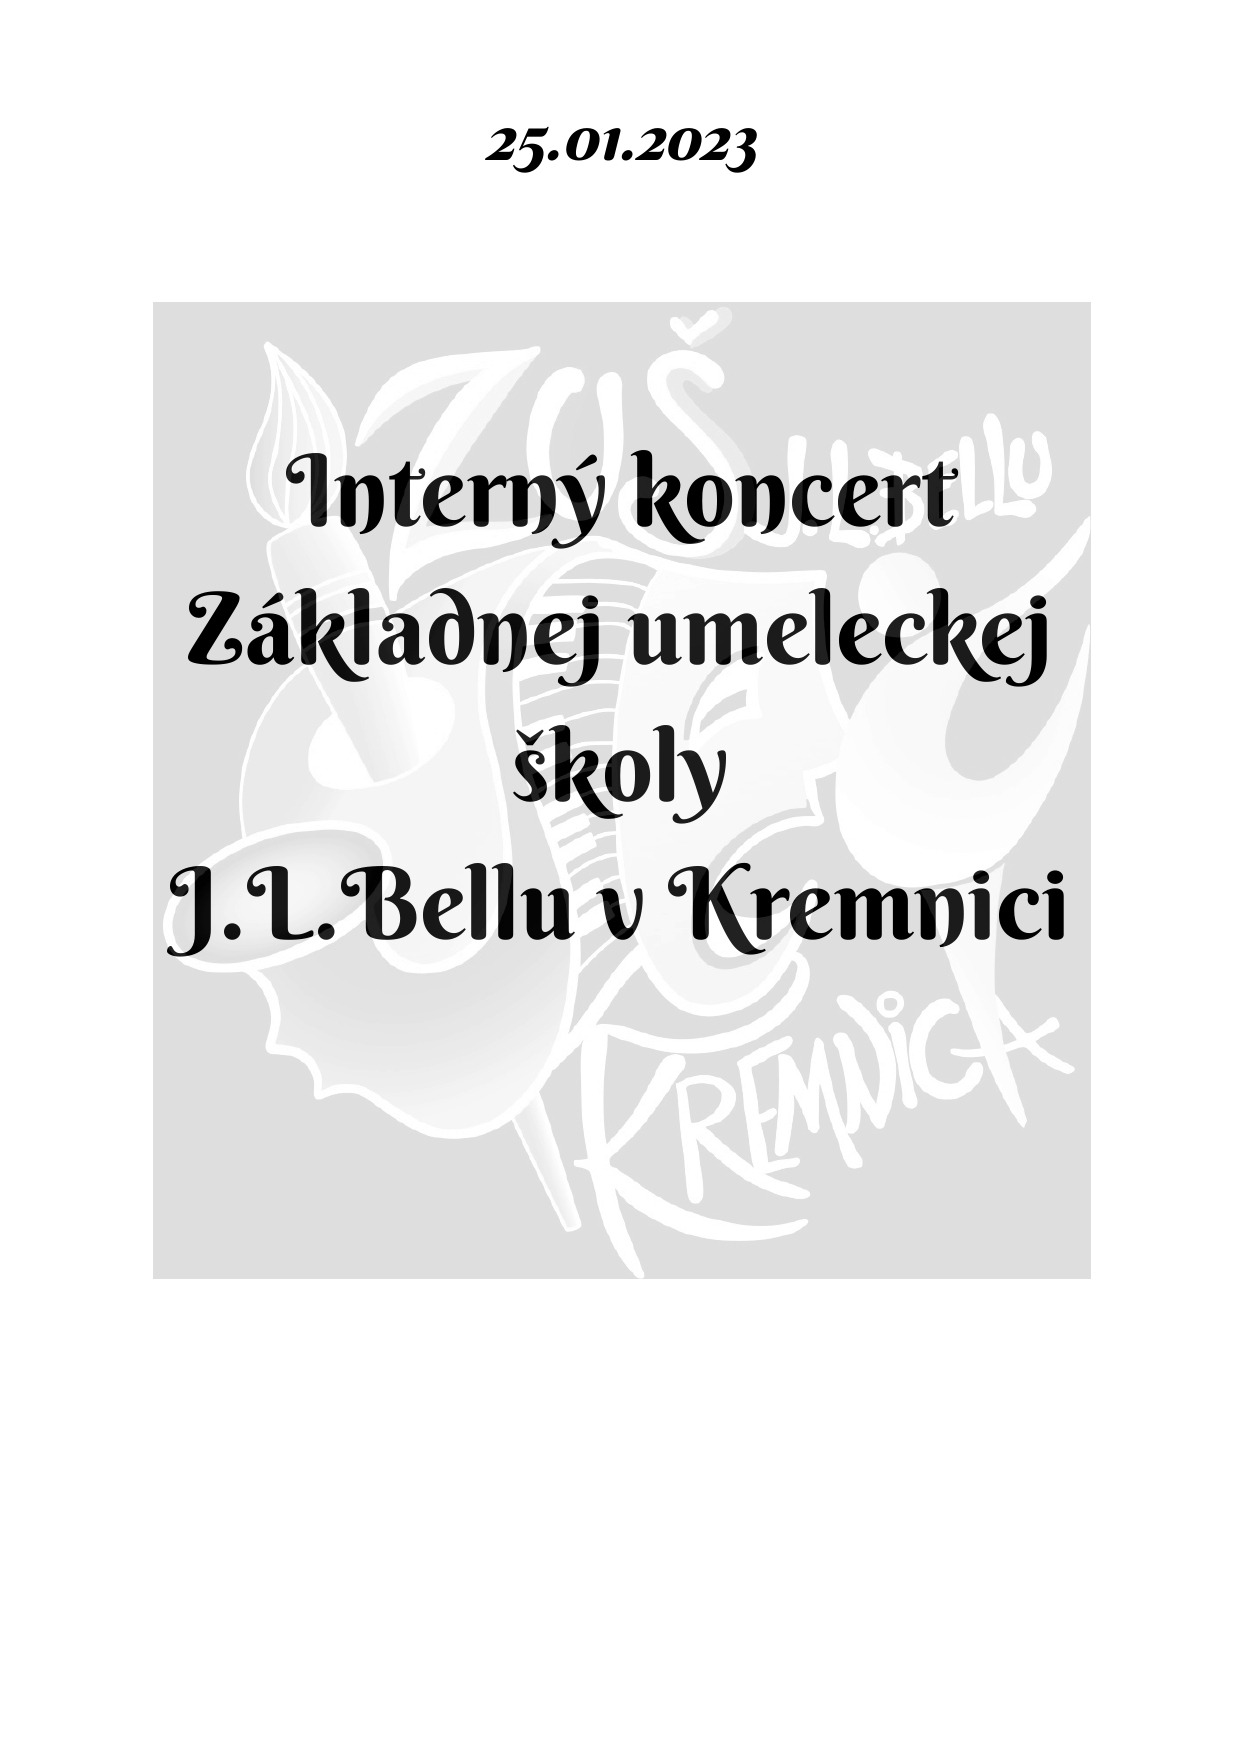 Pozvánka na online interný koncert dnes 25.01. o 17:00 - Obrázok 1